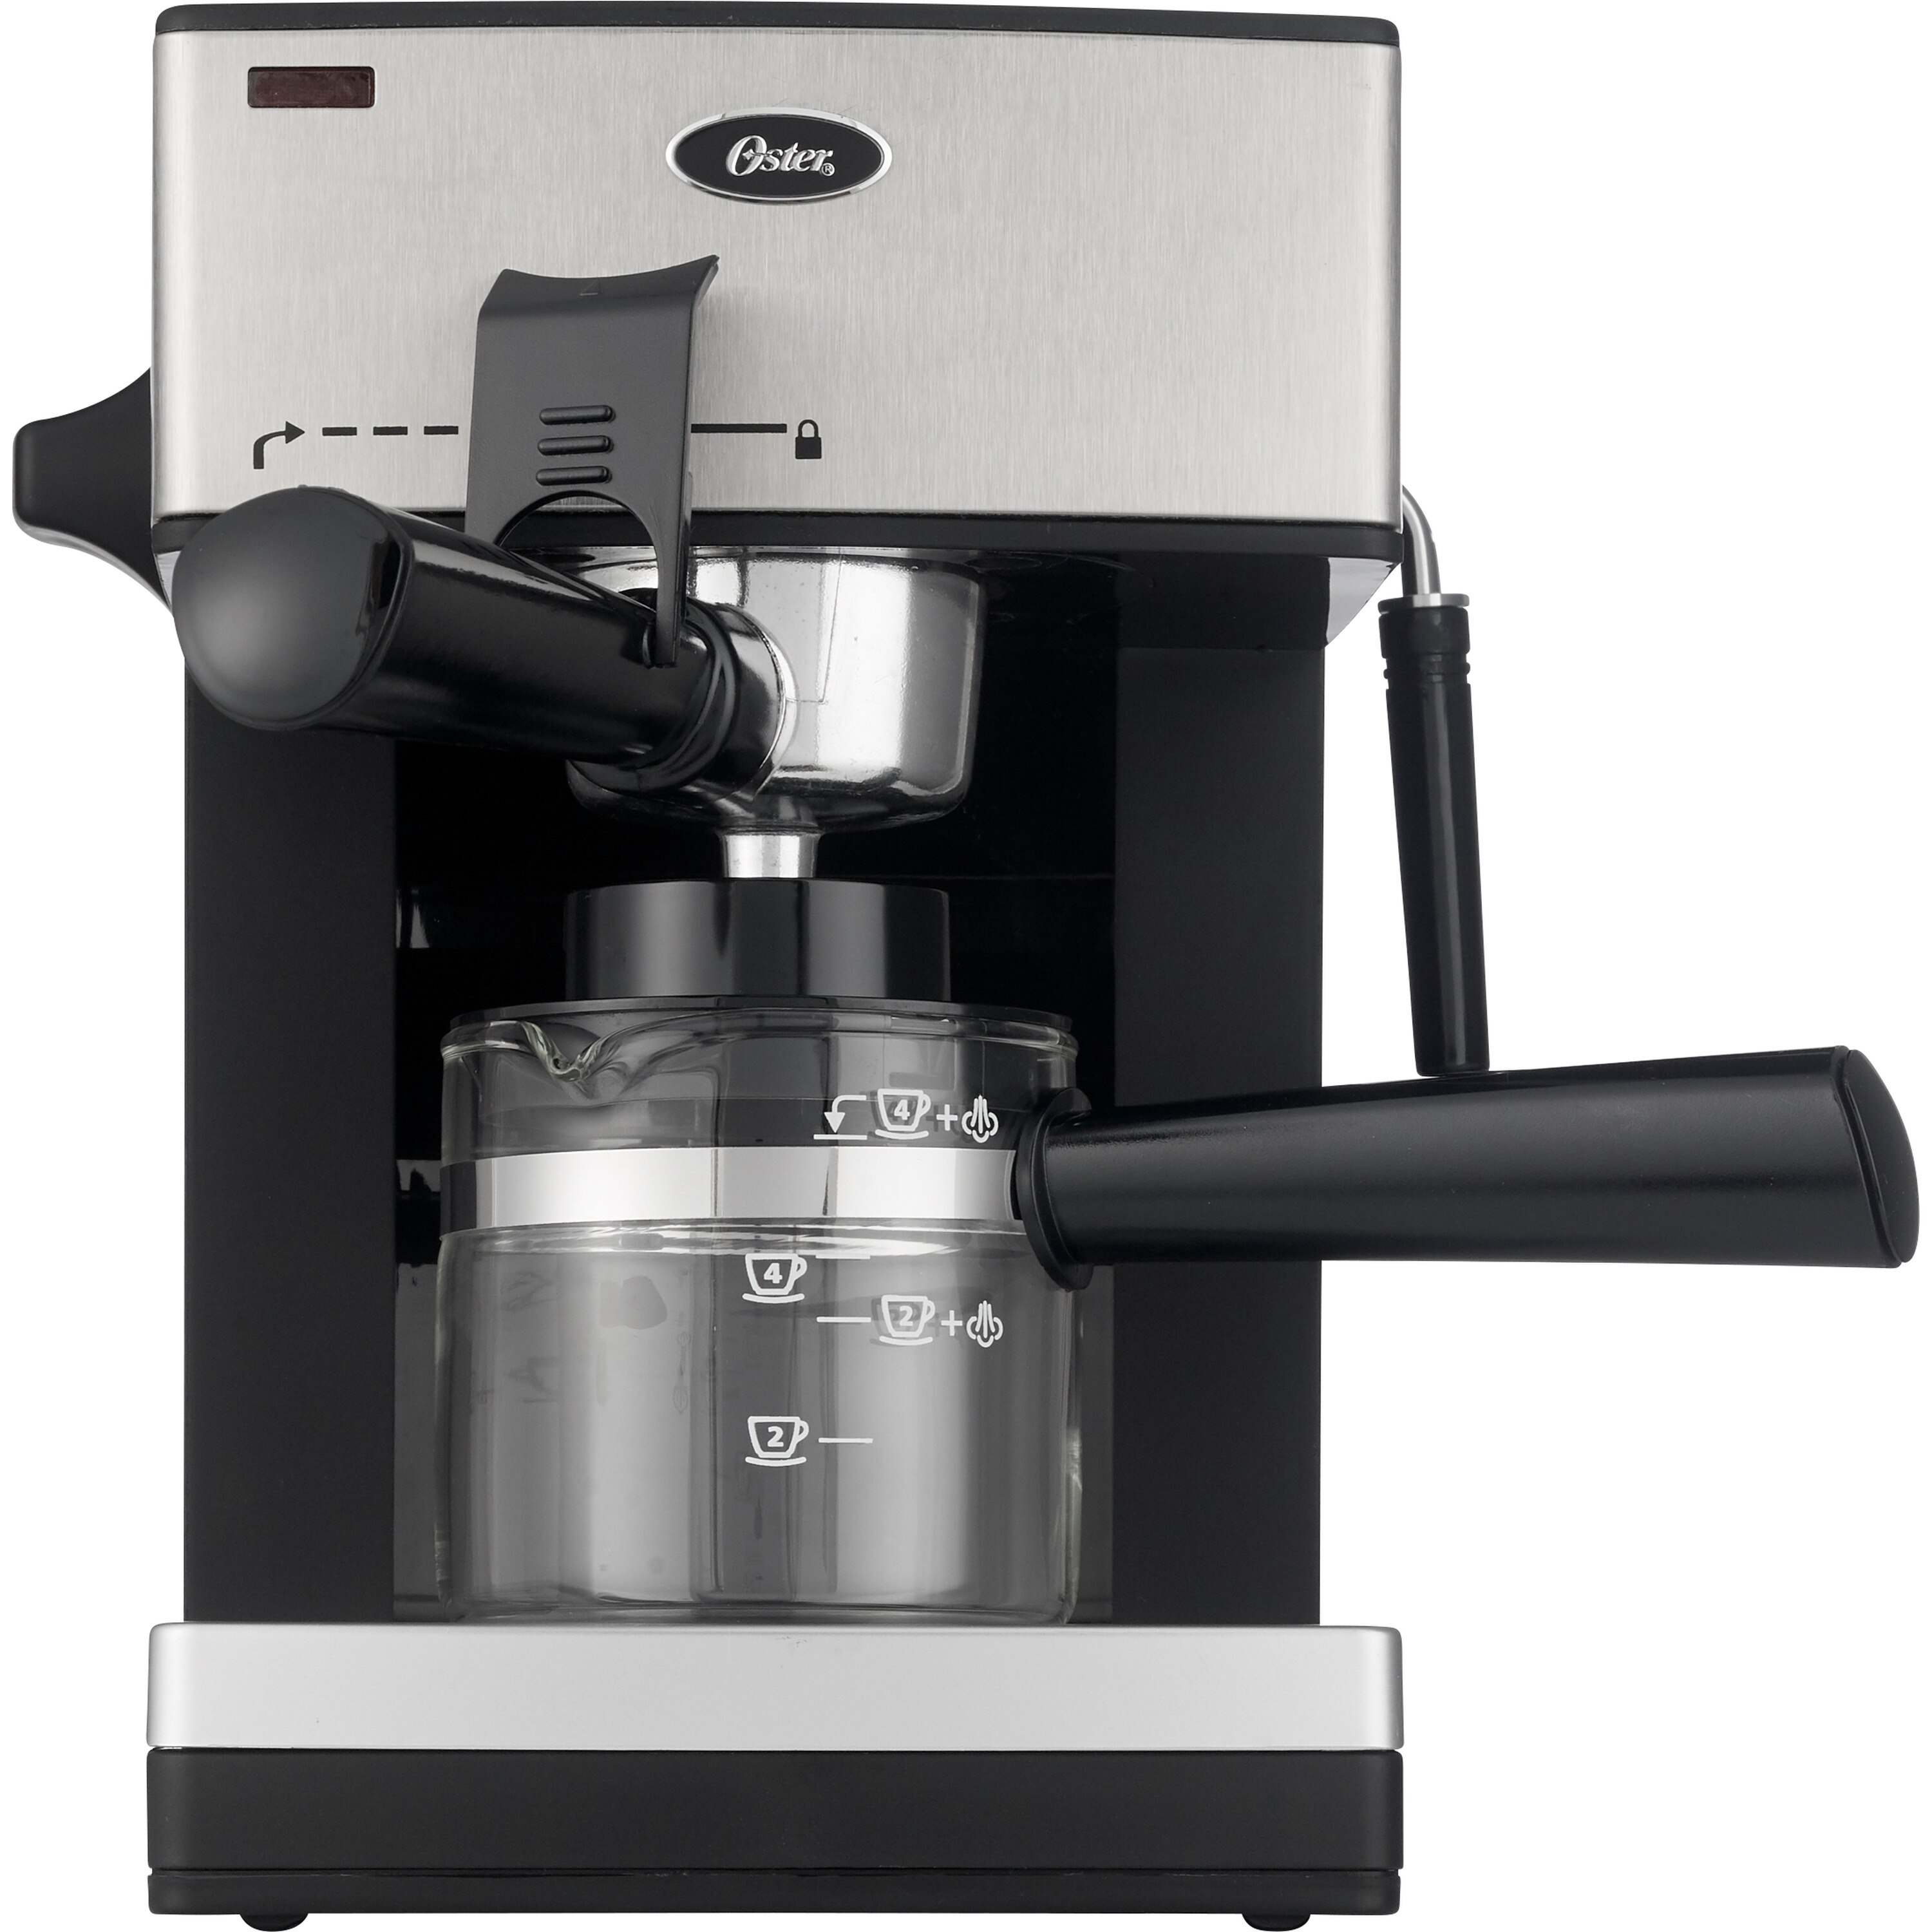 Oster Cappuccino And Espresso Maker Steam Pressure System, 4 Cup , CVS